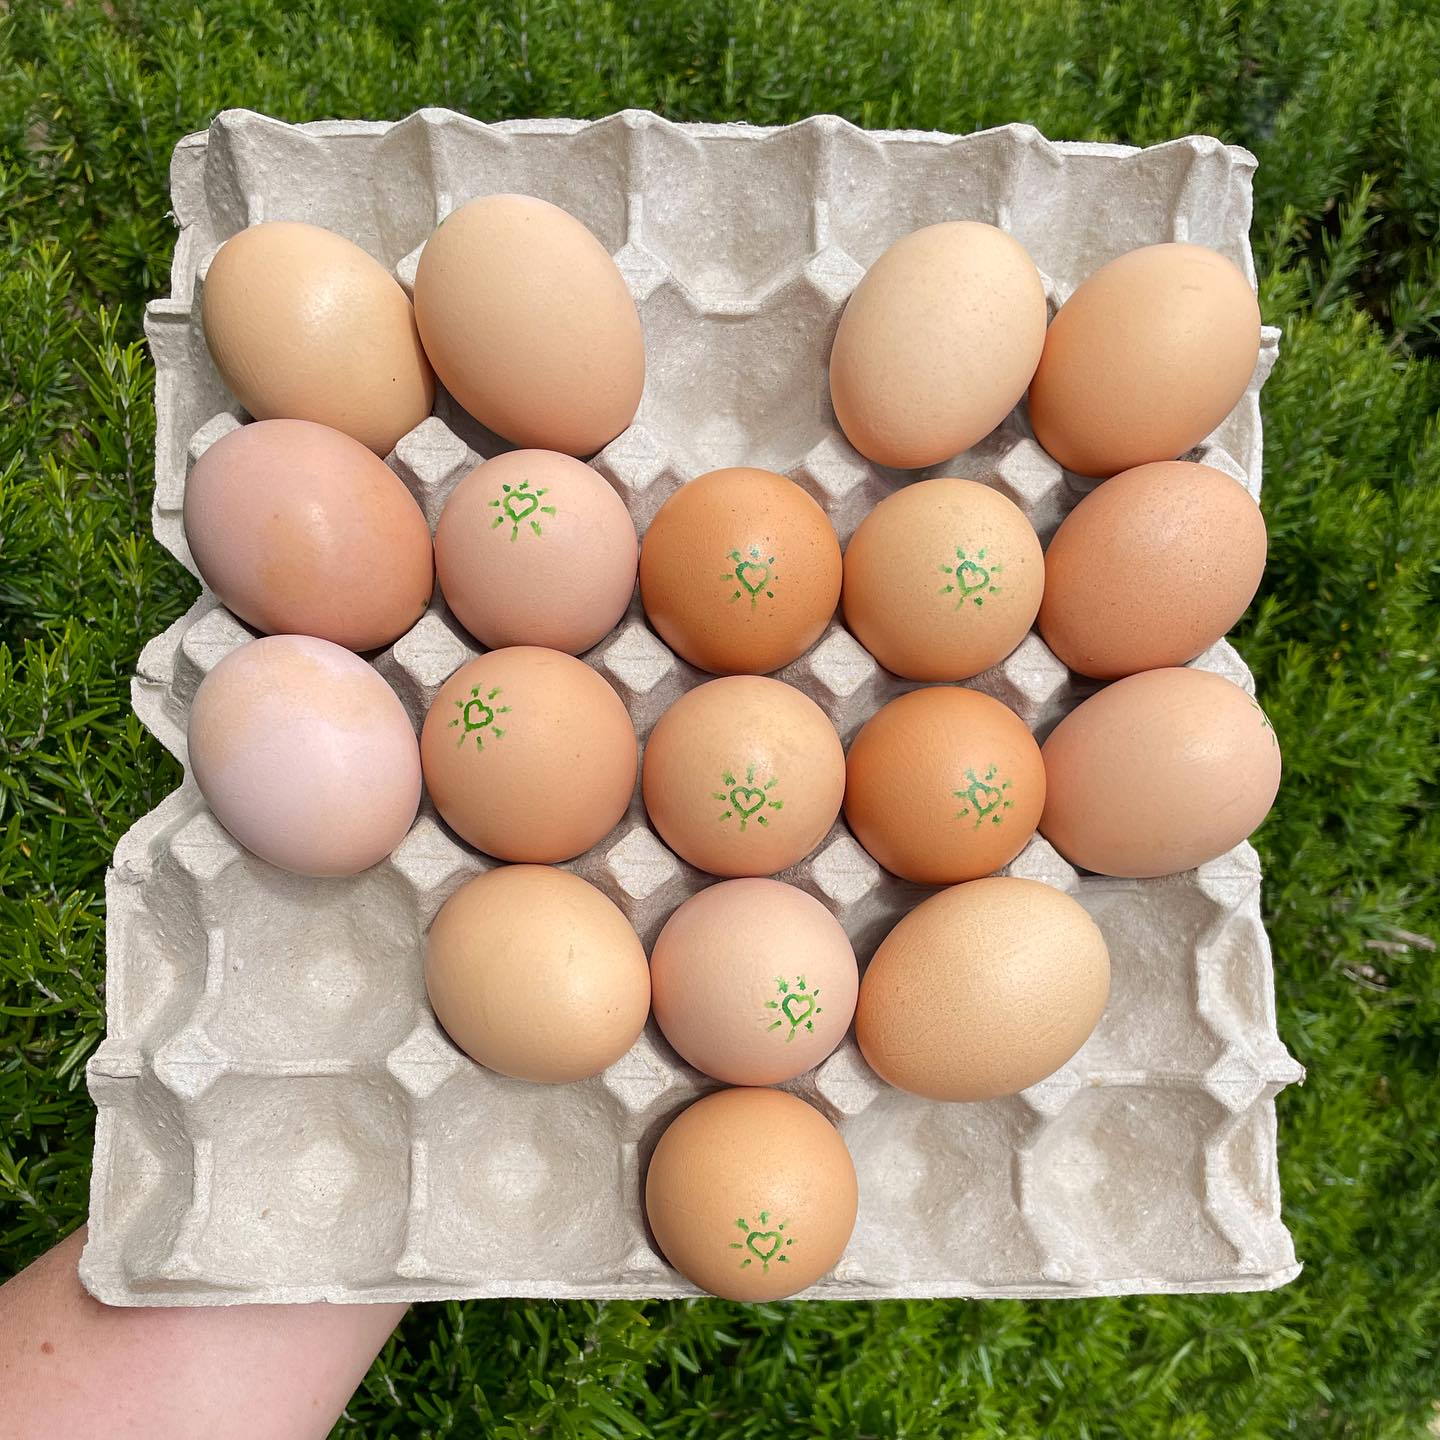 Love fresh farm direct pasture raised eggs